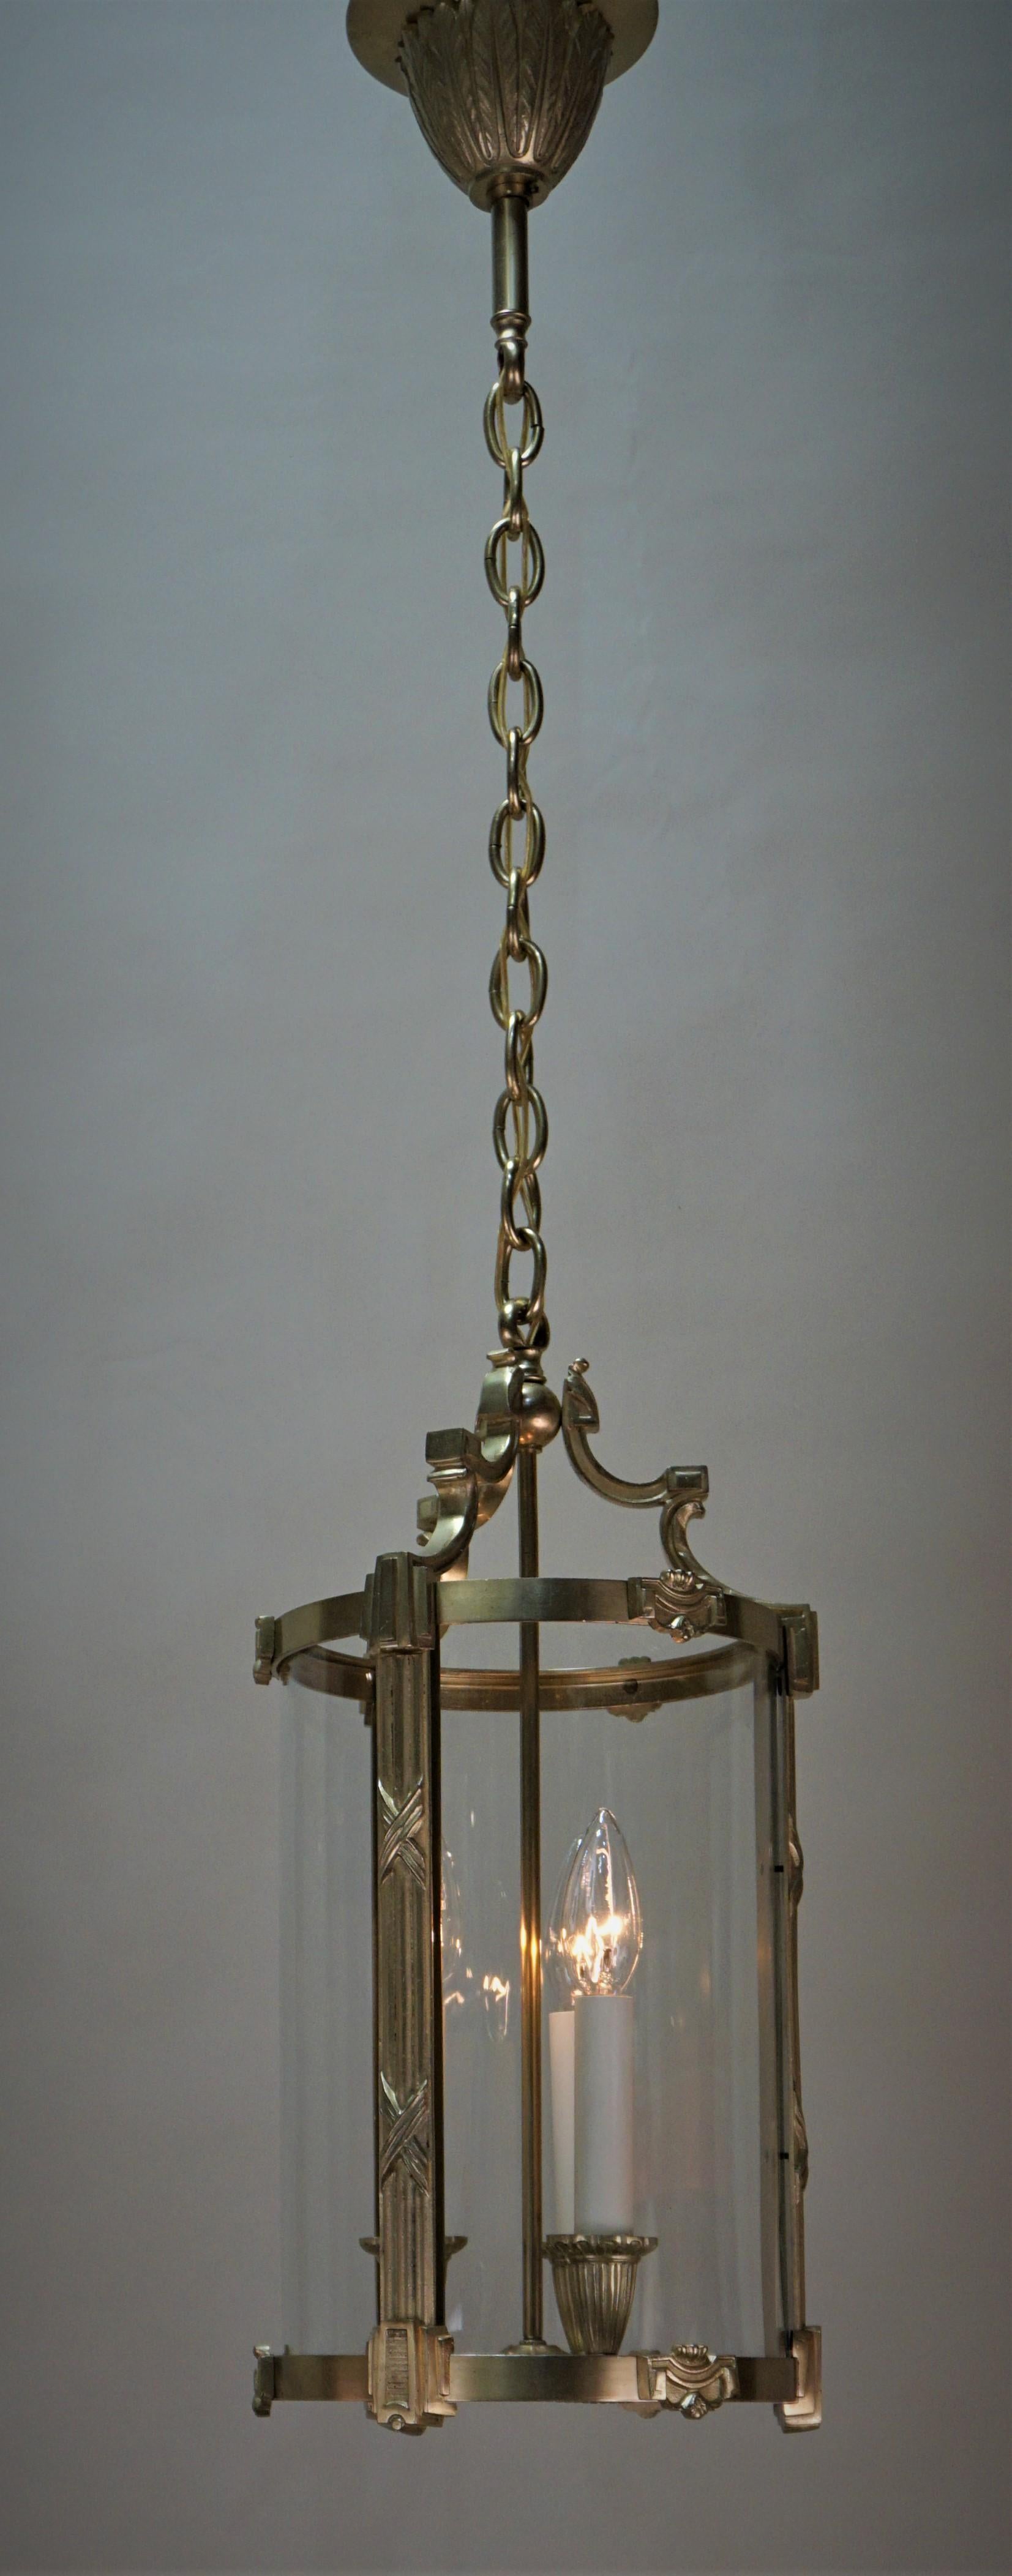 Elegant three-light bronze lantern with three panel bent glass lantern by Atelier Petitot
Minimum height fully installed is 25